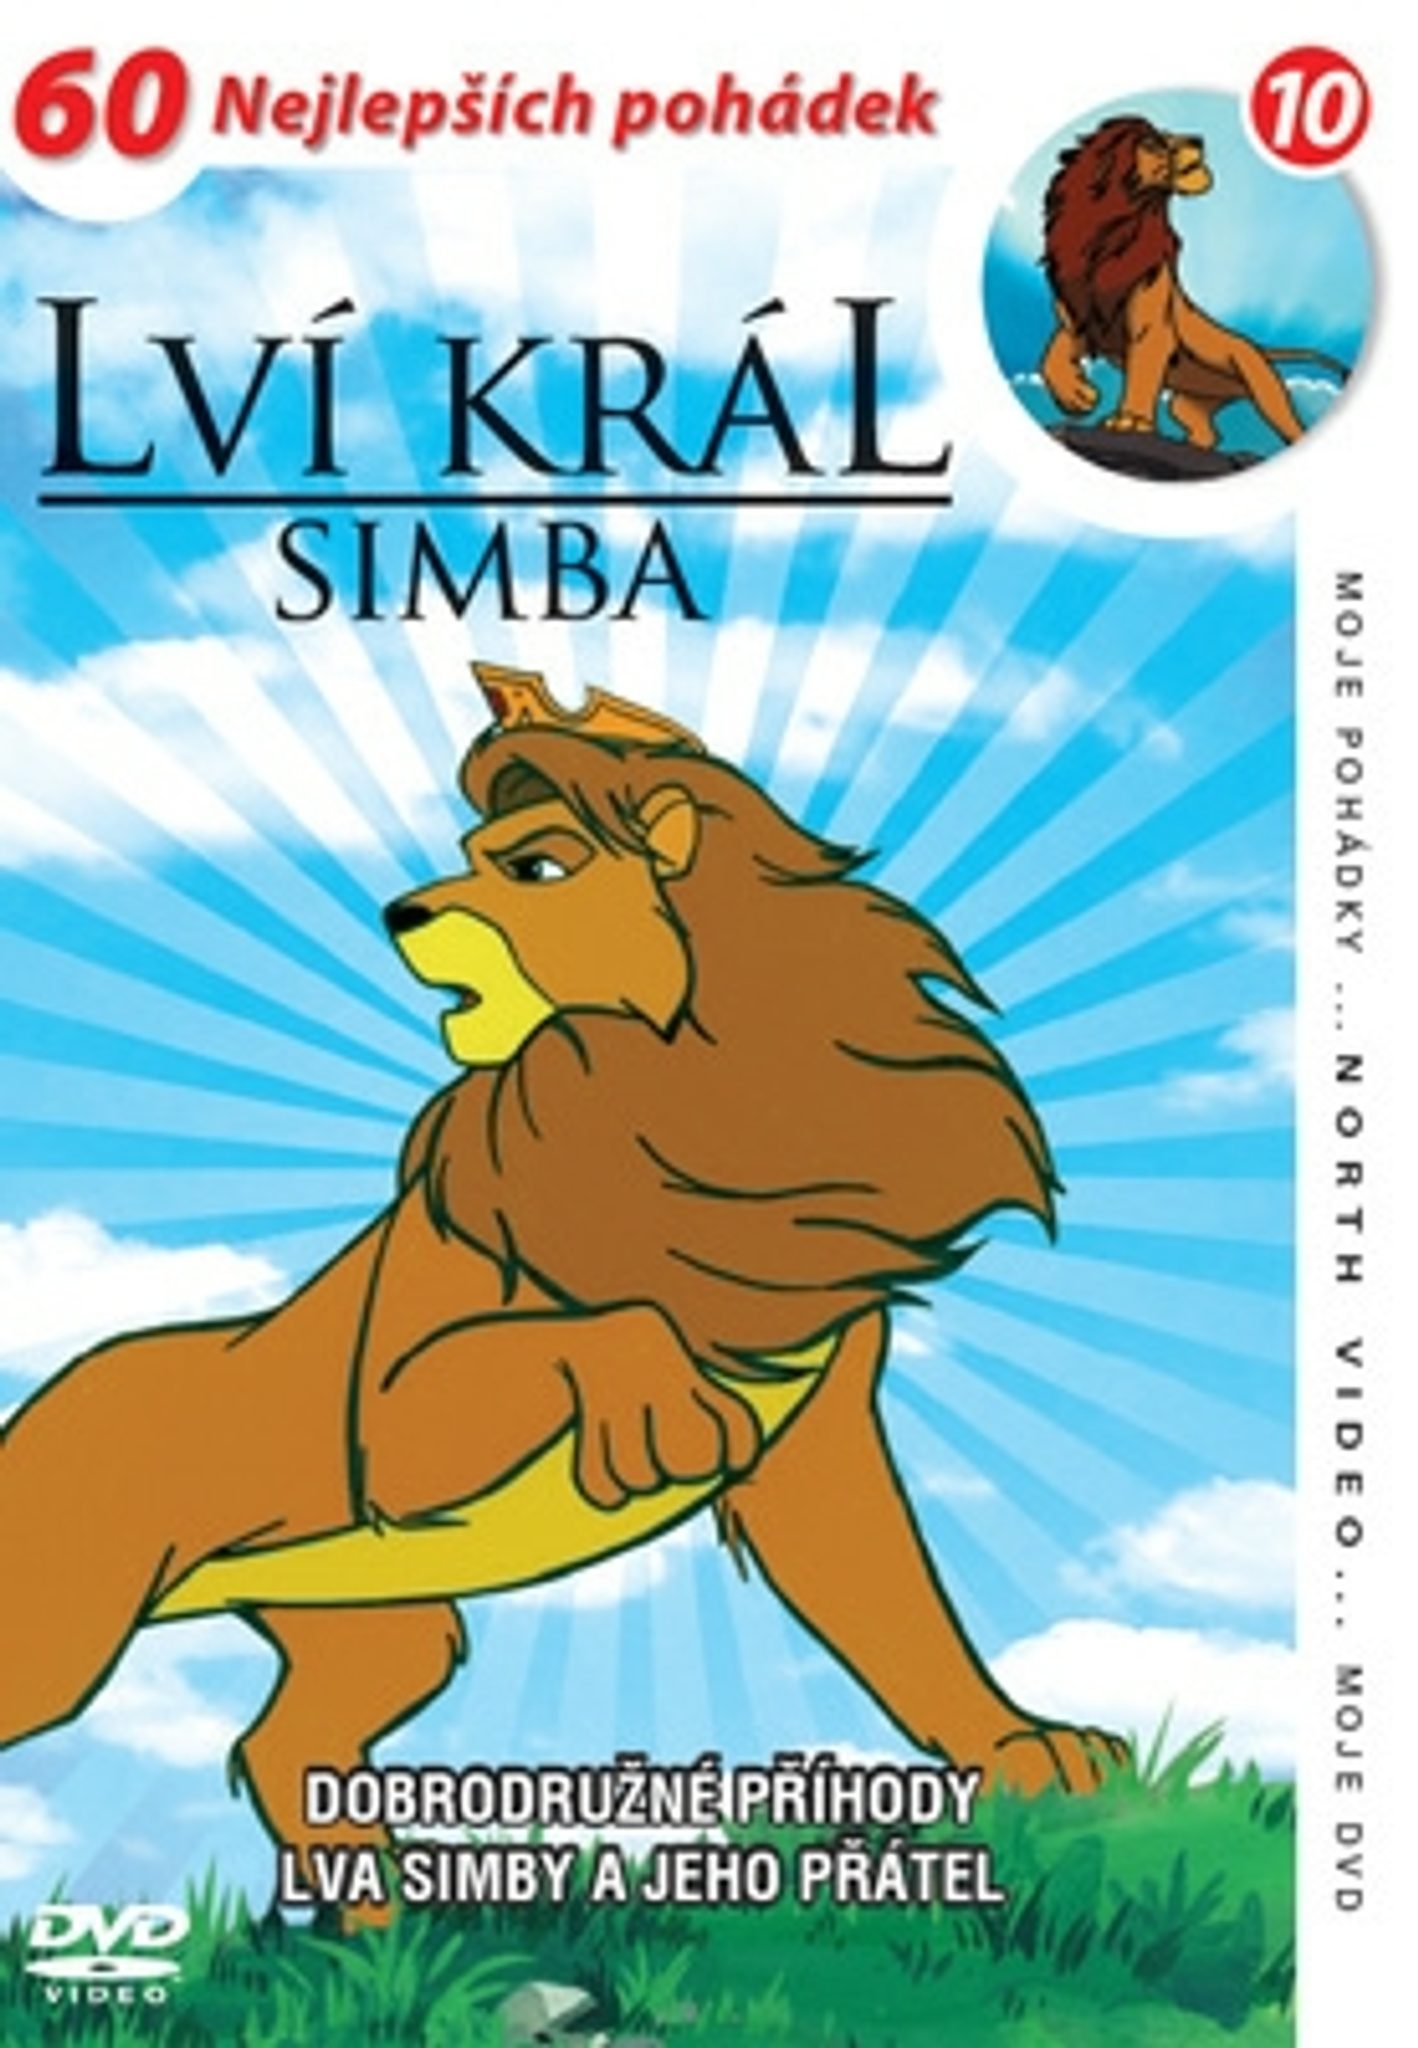 DVD Lv krl - Simba 10